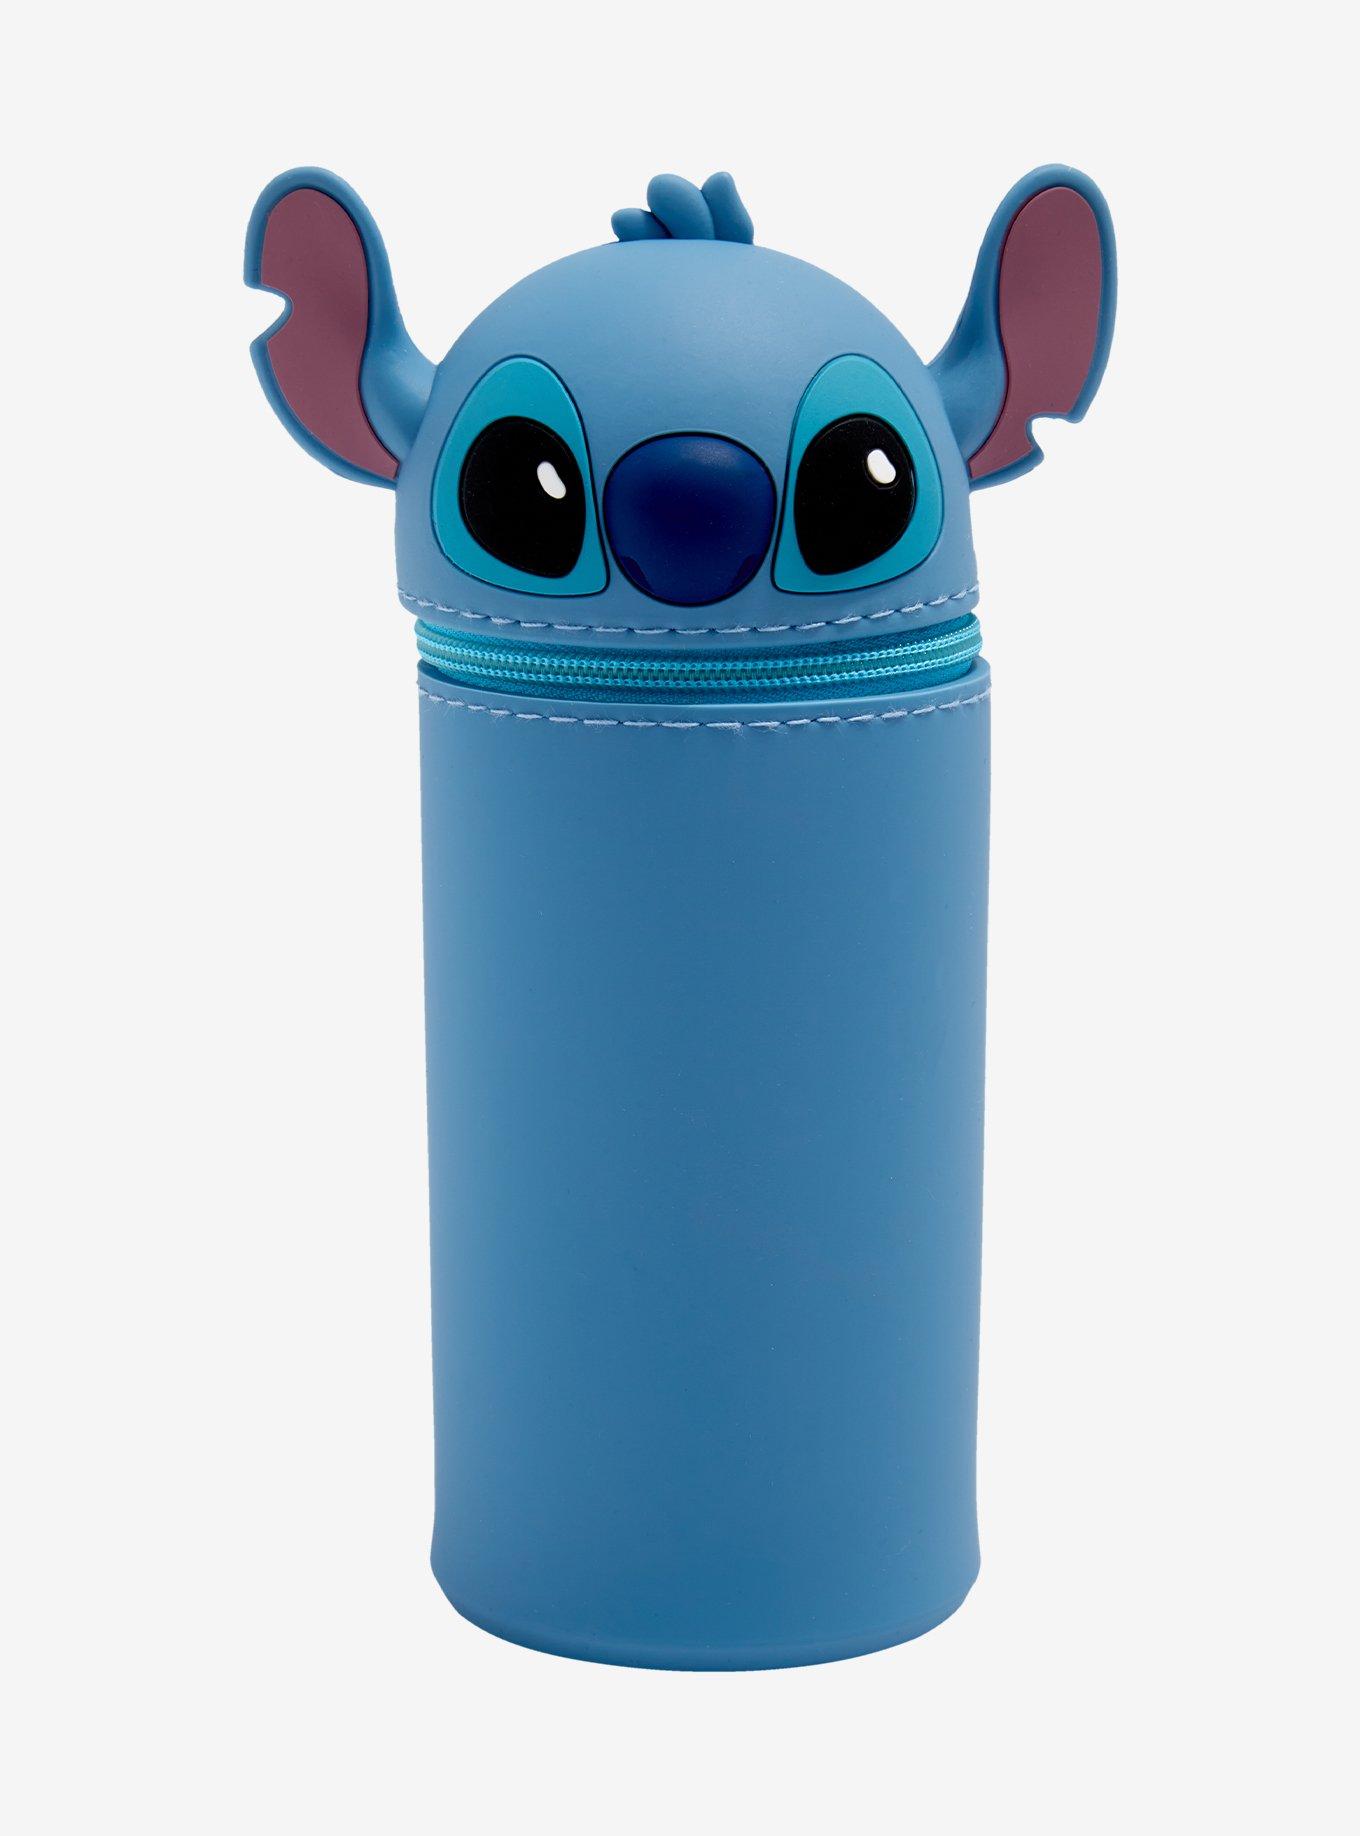 Disney Stitch Plush Pencil Case